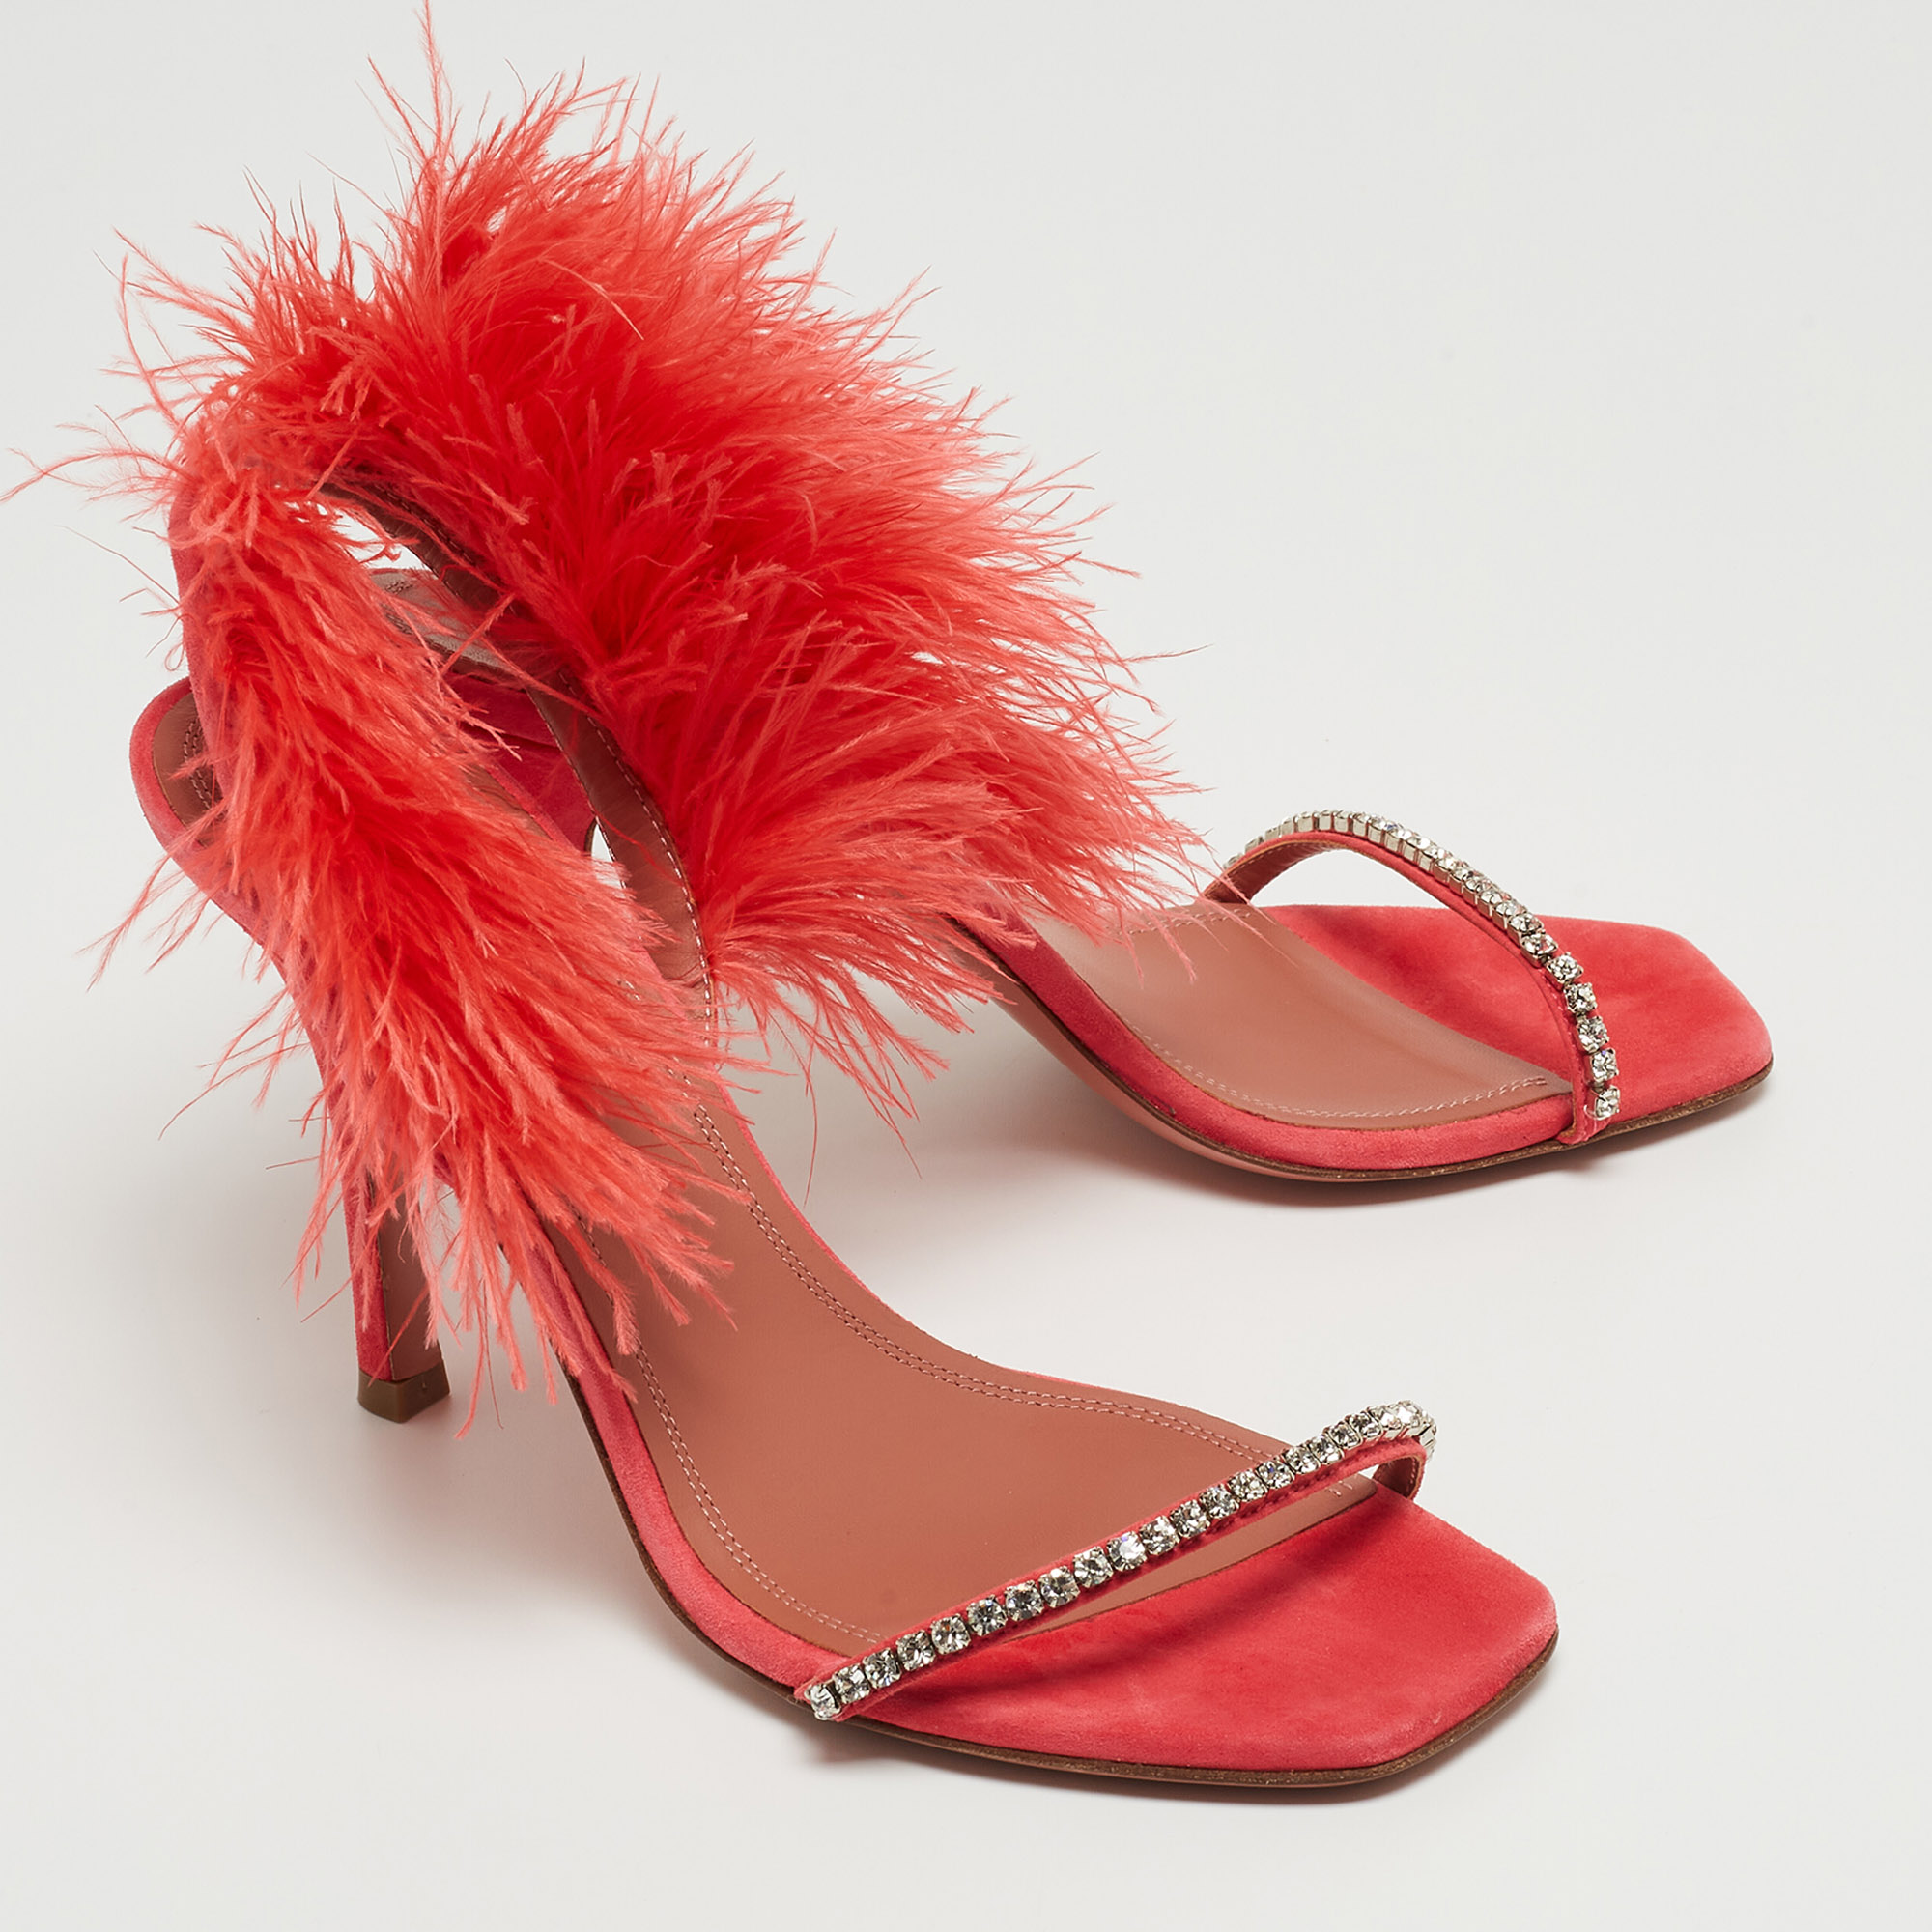 Amina Muaddi Pink Satin And Feather Crystal Embellished Adwoa Slingback Sandals Size 37.5